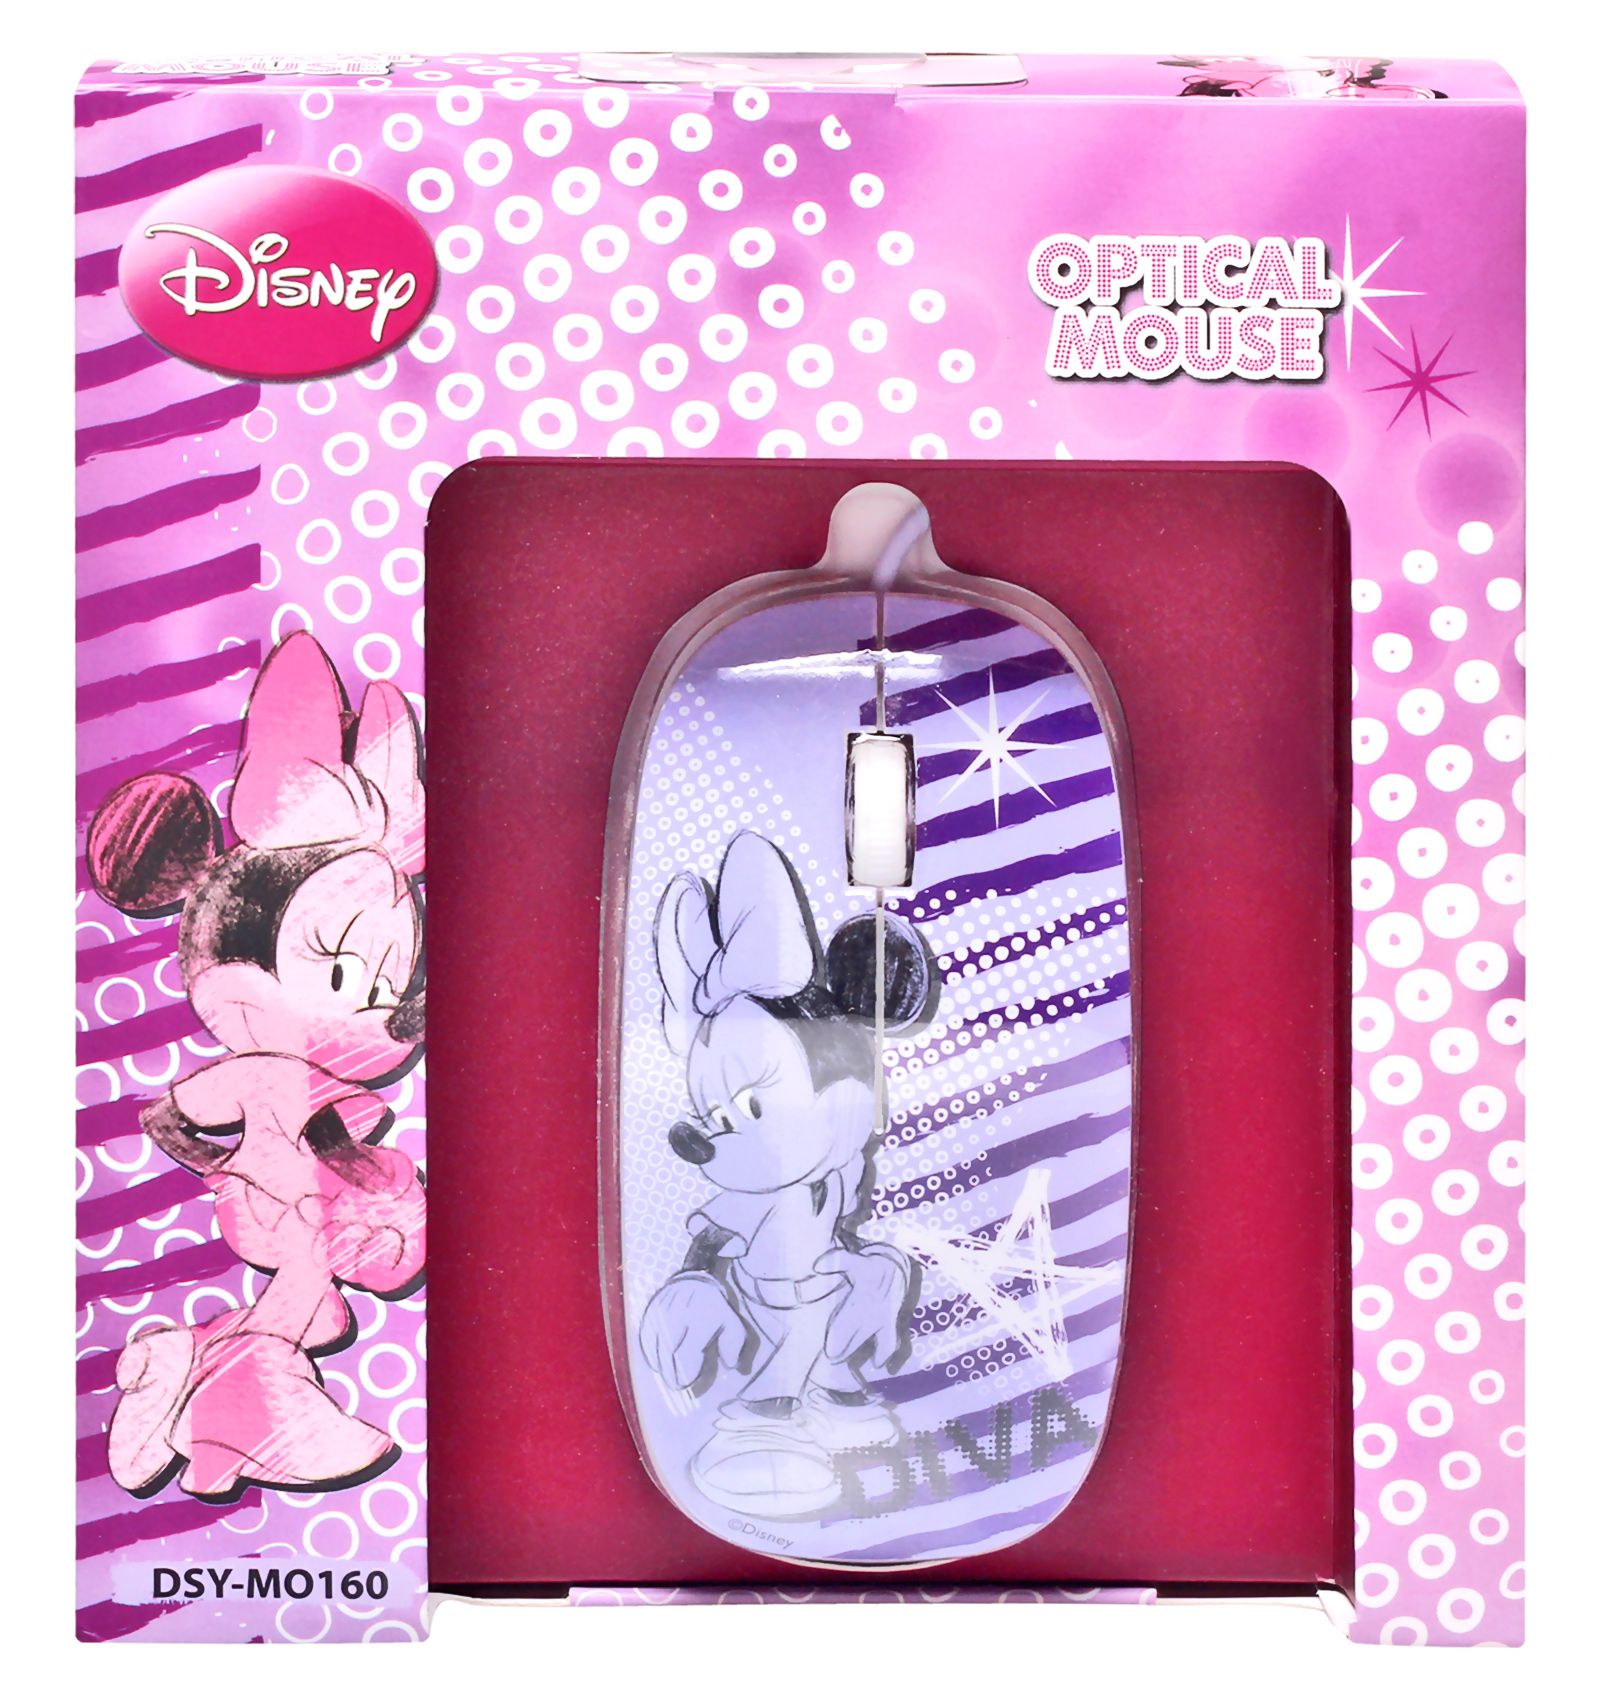 Disney - Minnie Mouse Optical Mouse